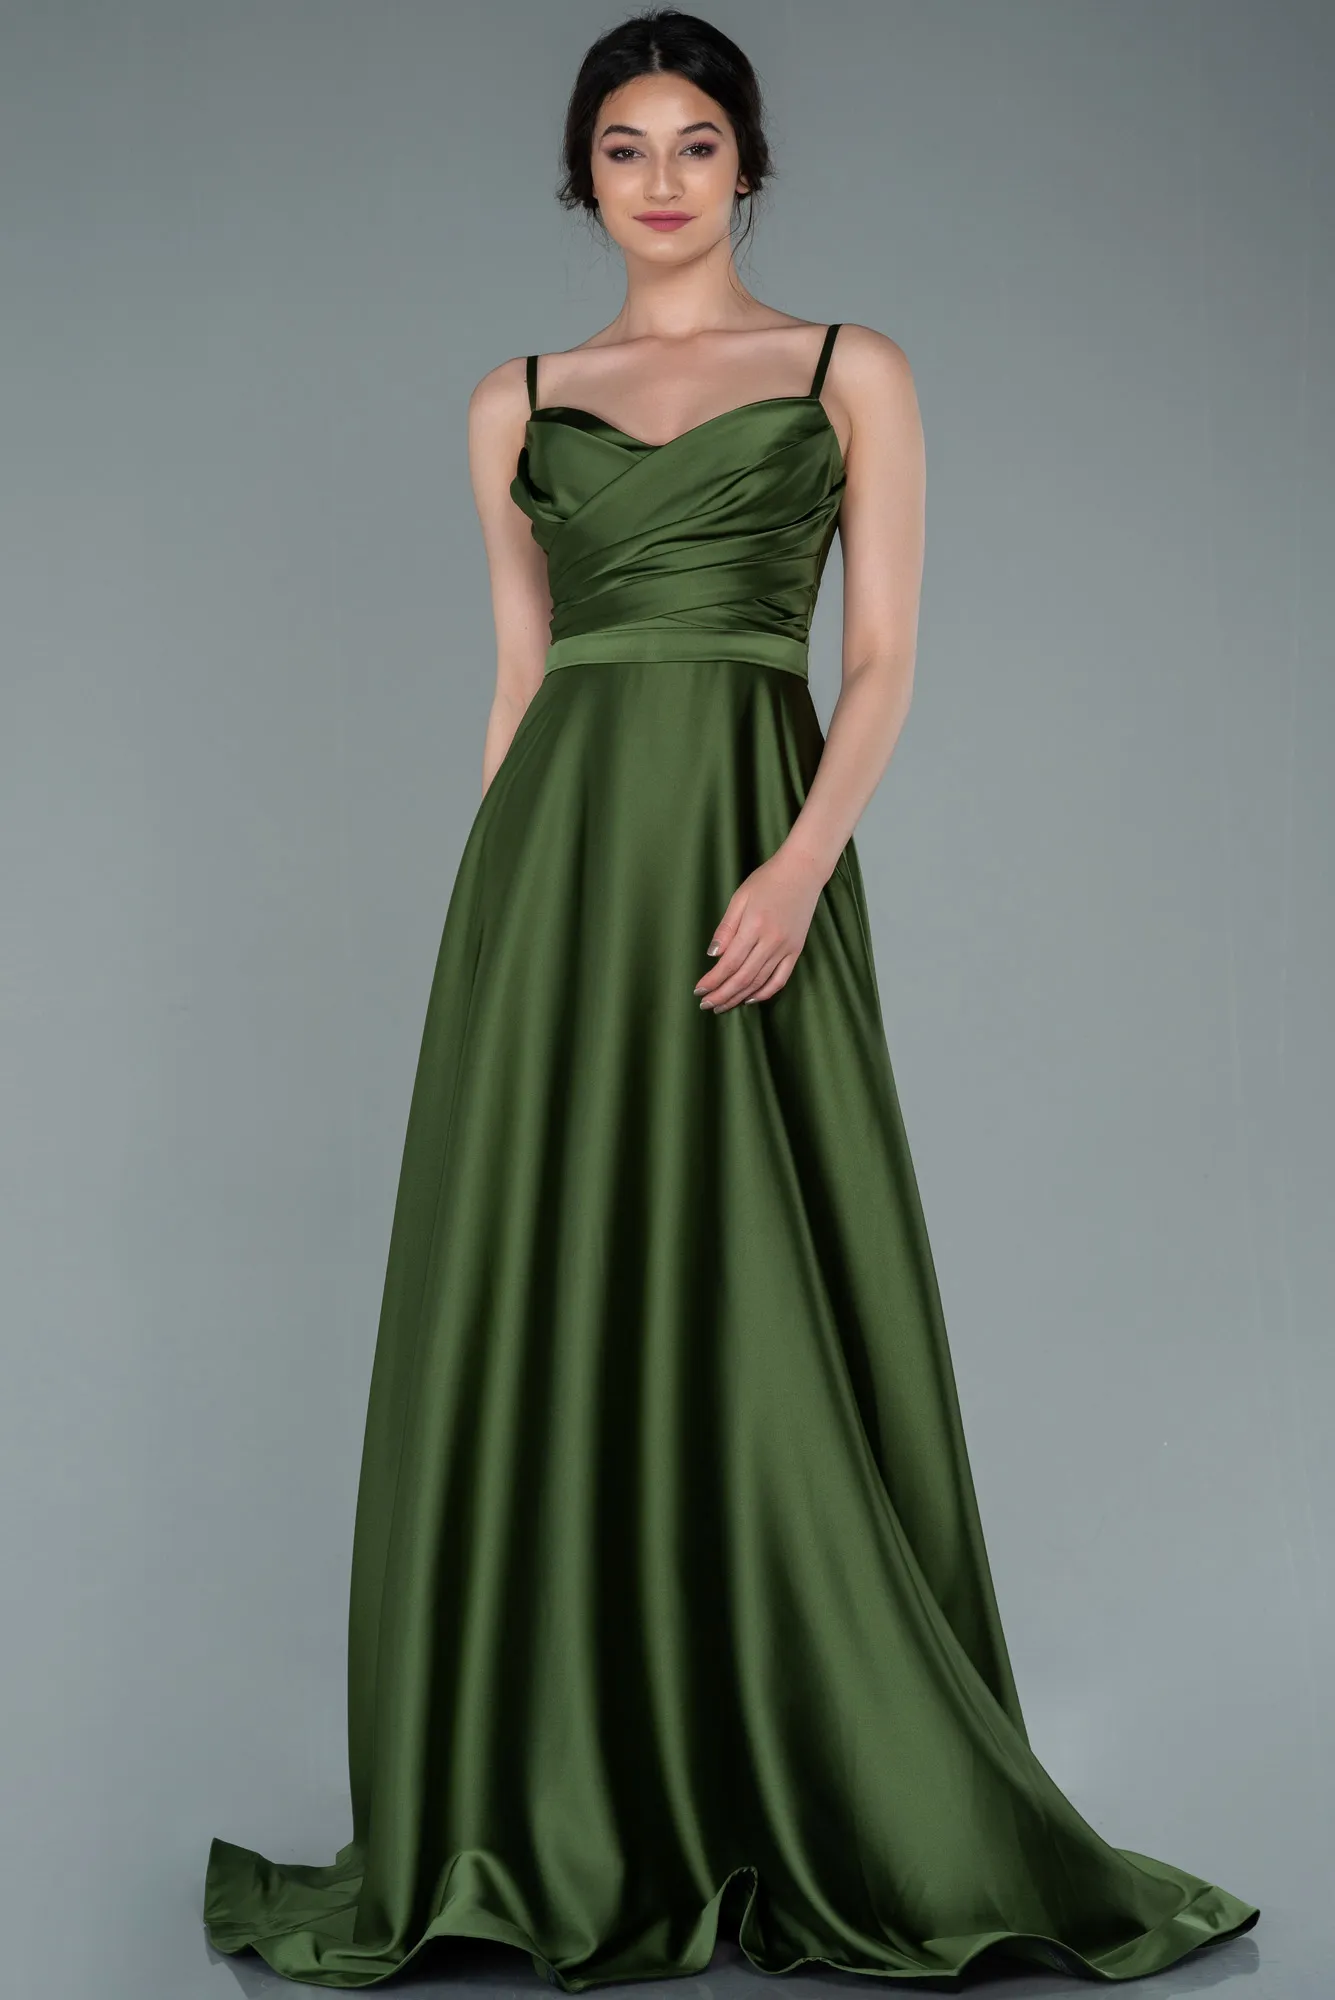 Olive Drab-Long Satin Evening Dress ABU1601